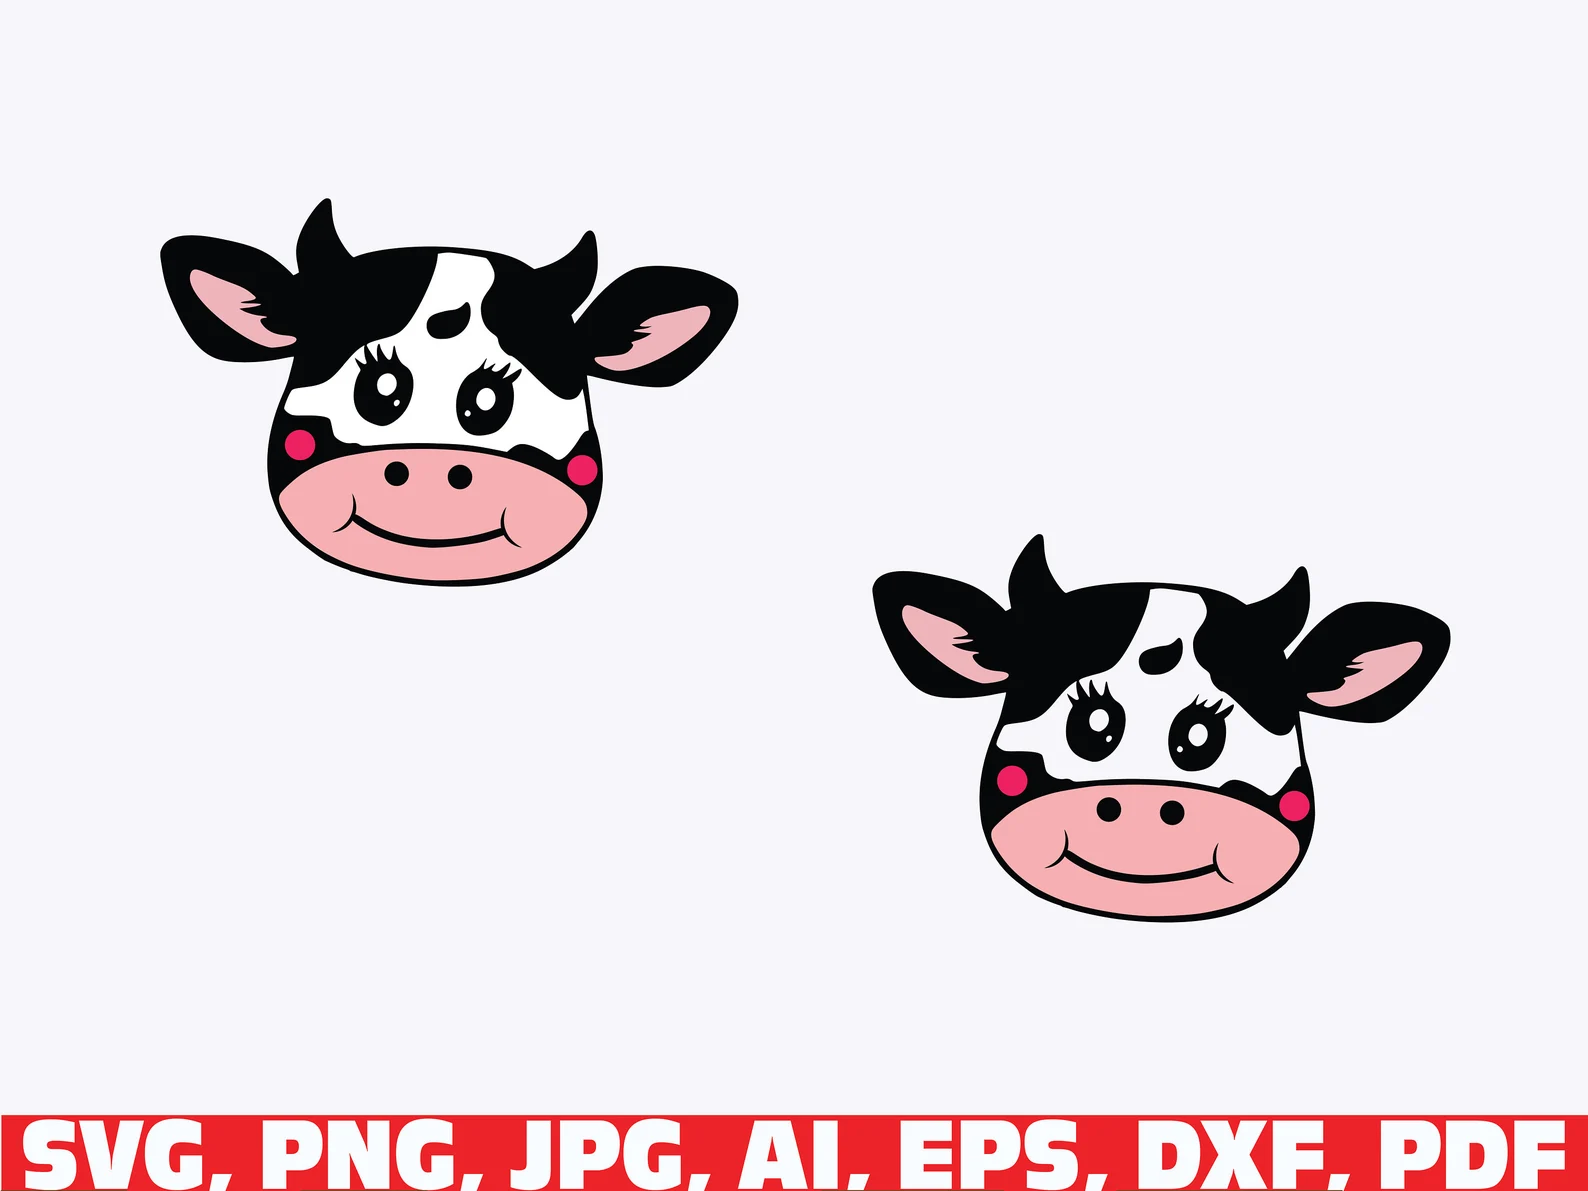 Pair of cartoon cows with big eyes.